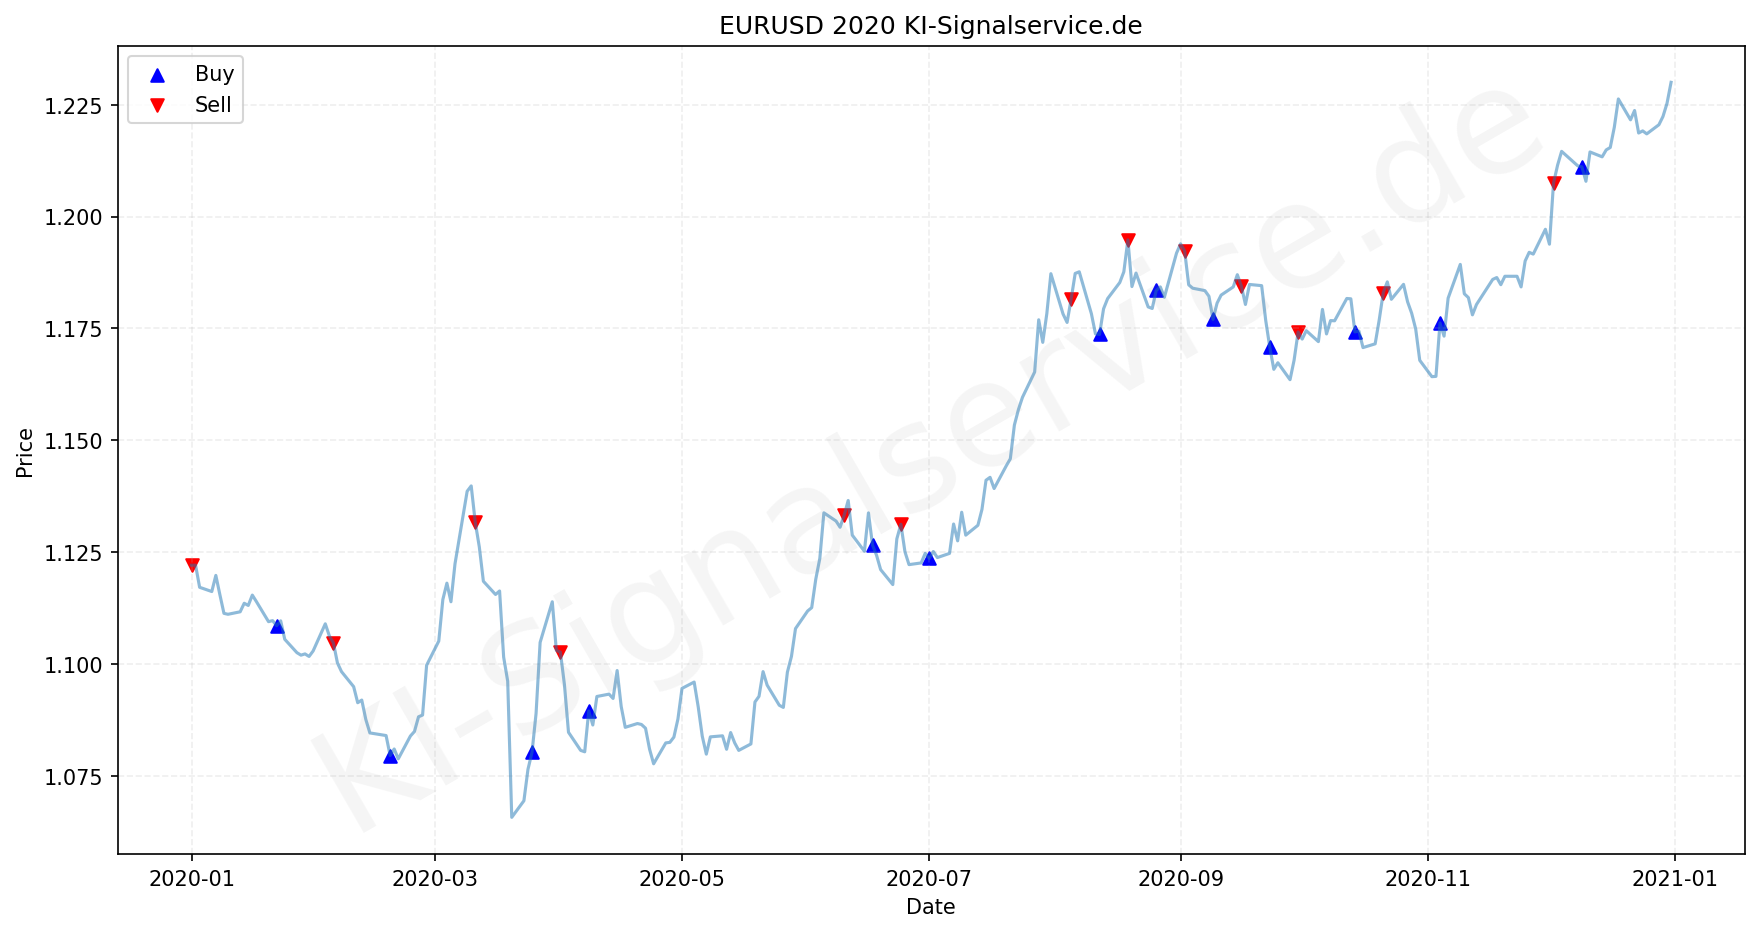 EURUSD Chart - KI Tradingsignale 2020